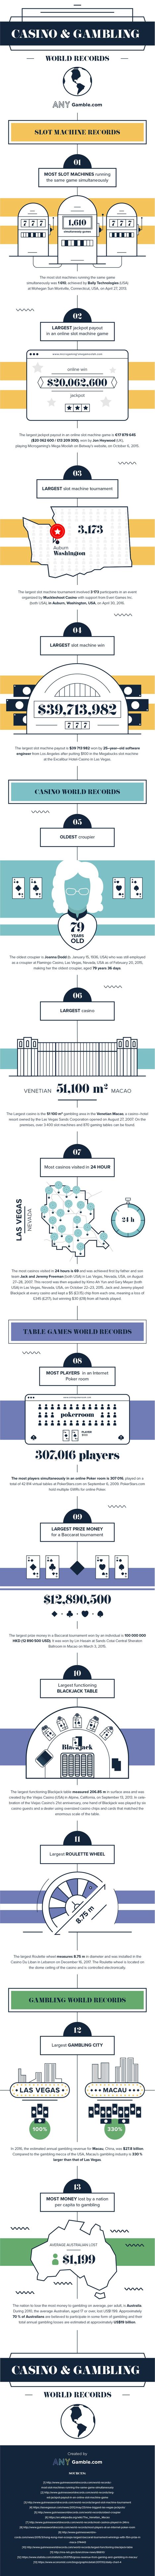 Casino and Gambling World Records